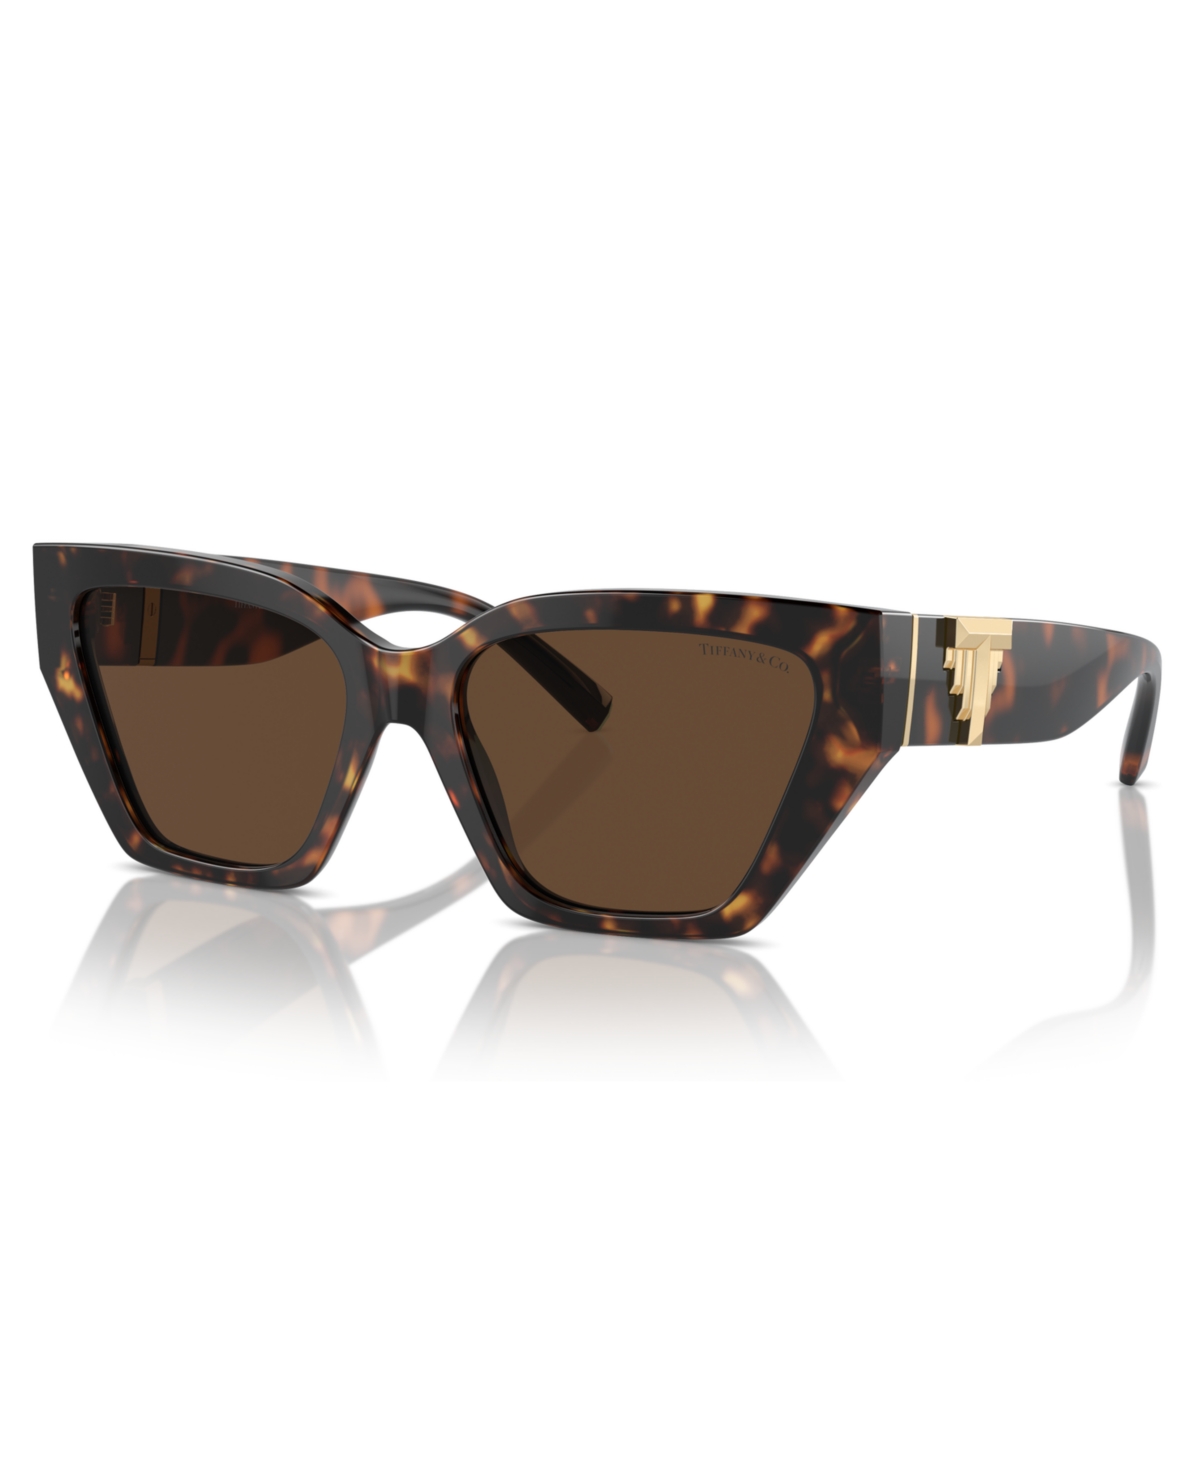 Tiffany & Co Women's Sunglasses, Tf4218 In Light Brown